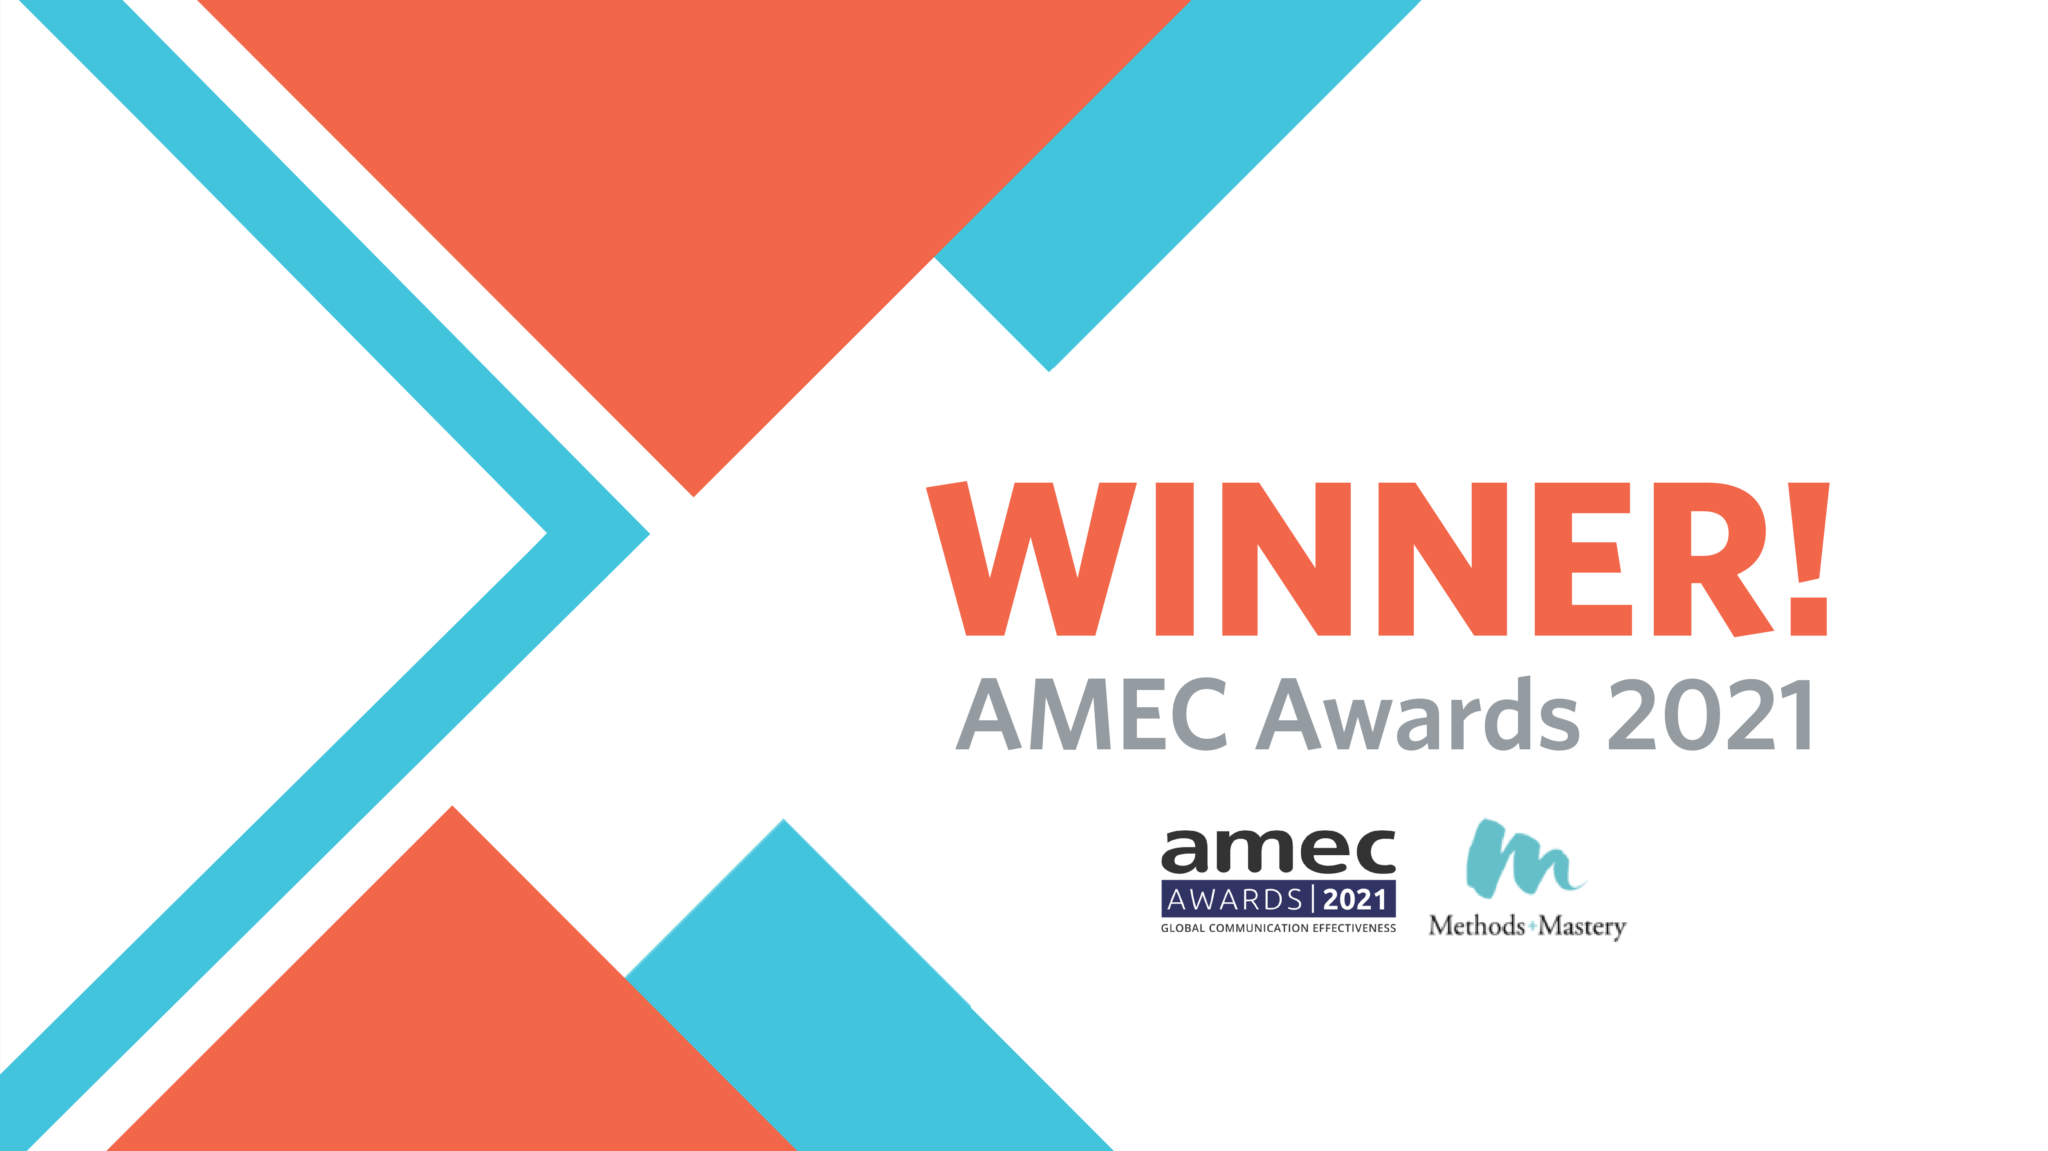 AMEC Awards 2021 Wins FleishmanHillard